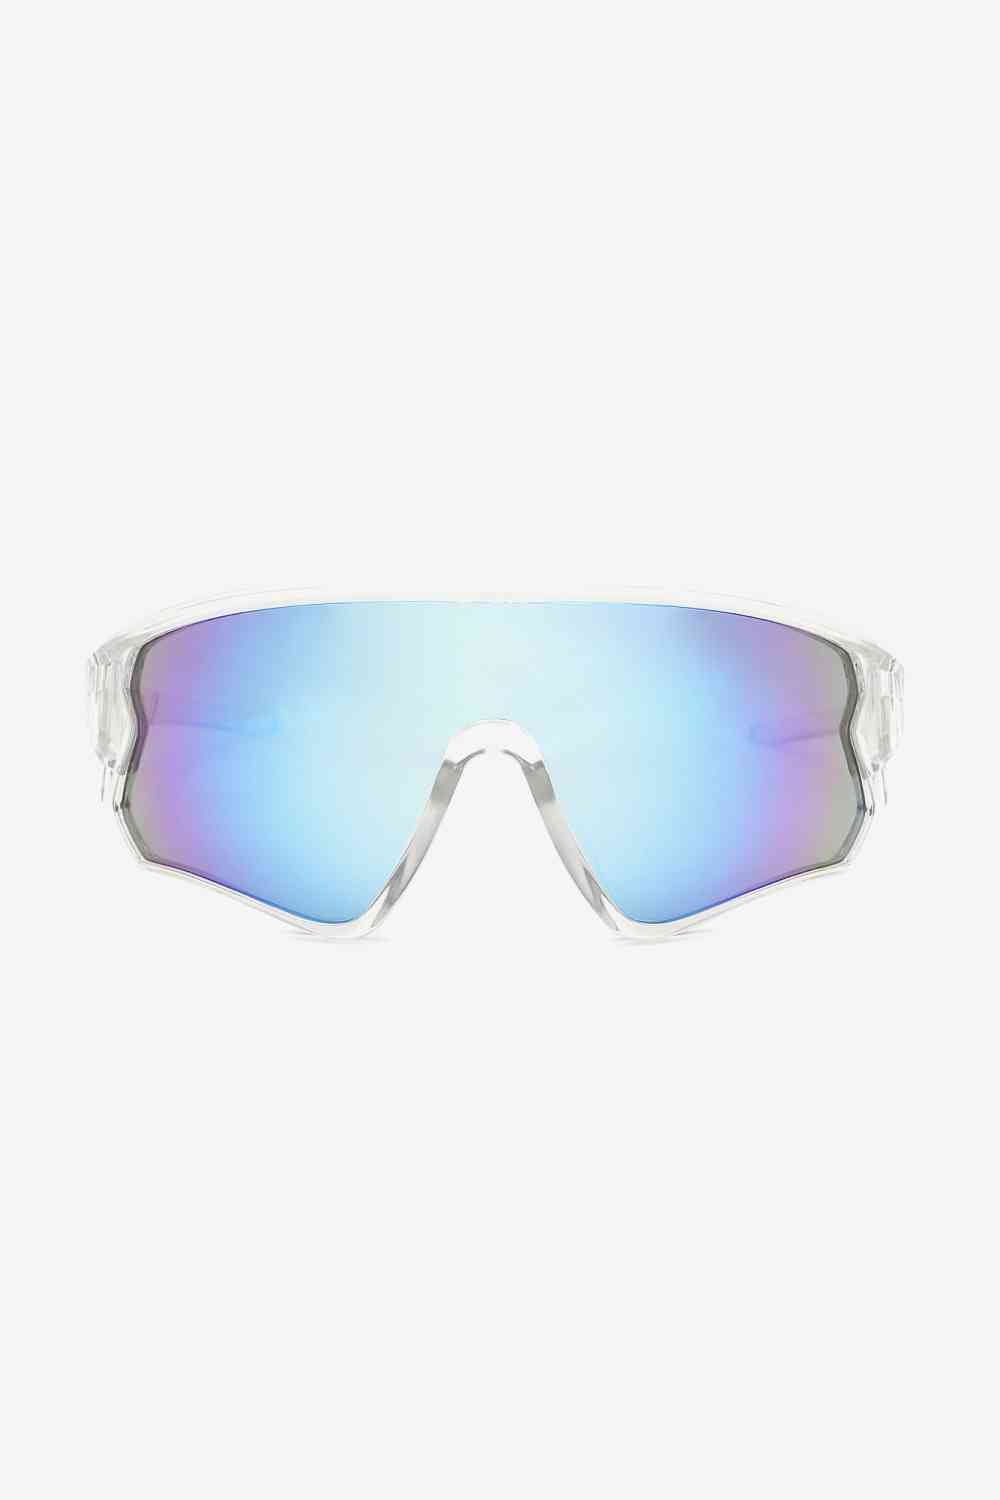 Spectrum Shield Sunglasses - GemThreads Boutique Spectrum Shield Sunglasses